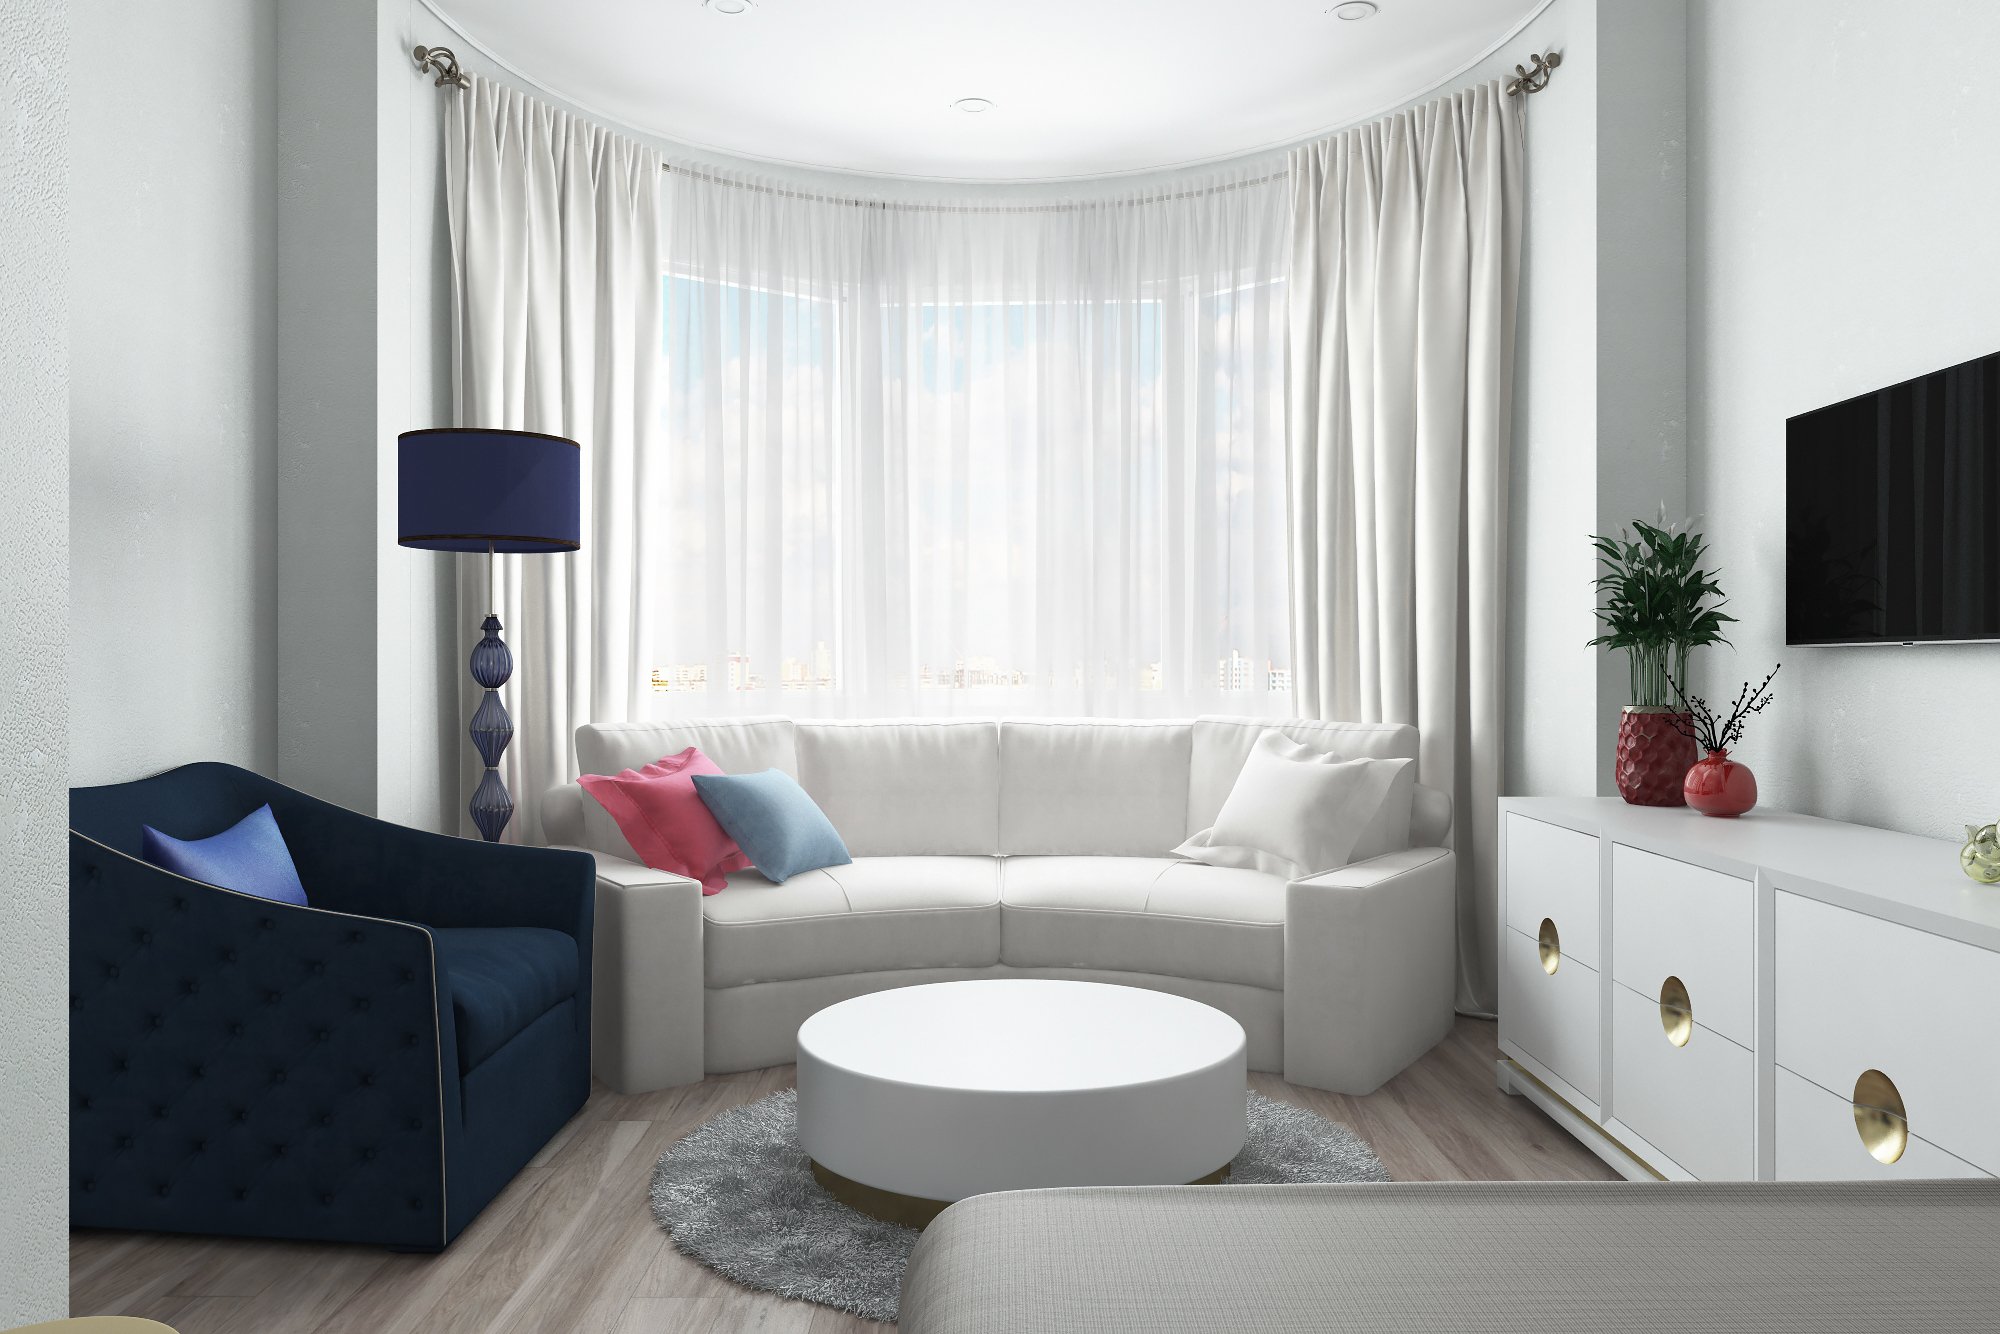 Дизайн интерьера квартиры с эркером фото - Интернет-журнал Inhomes